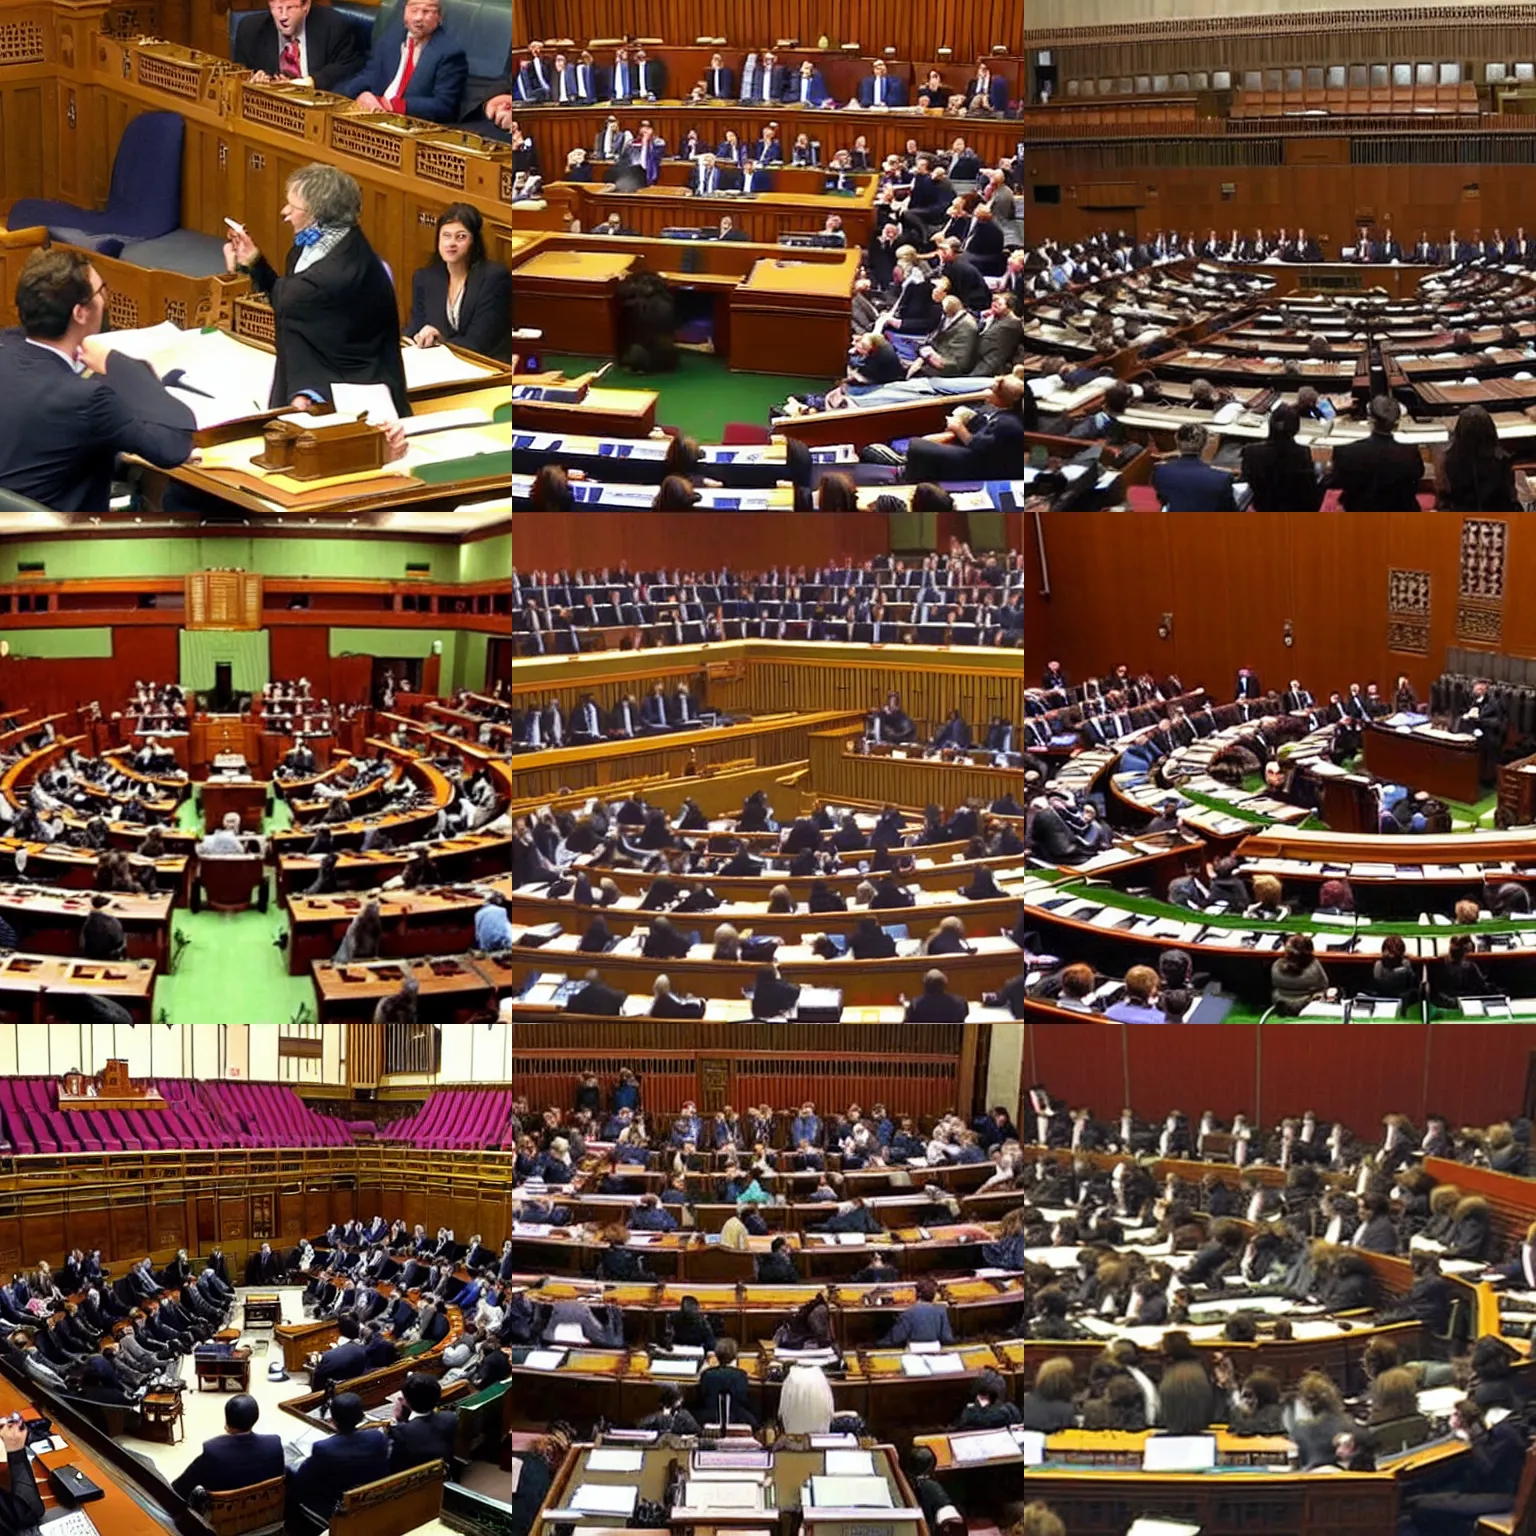 Prompt: cats debating in a parliament